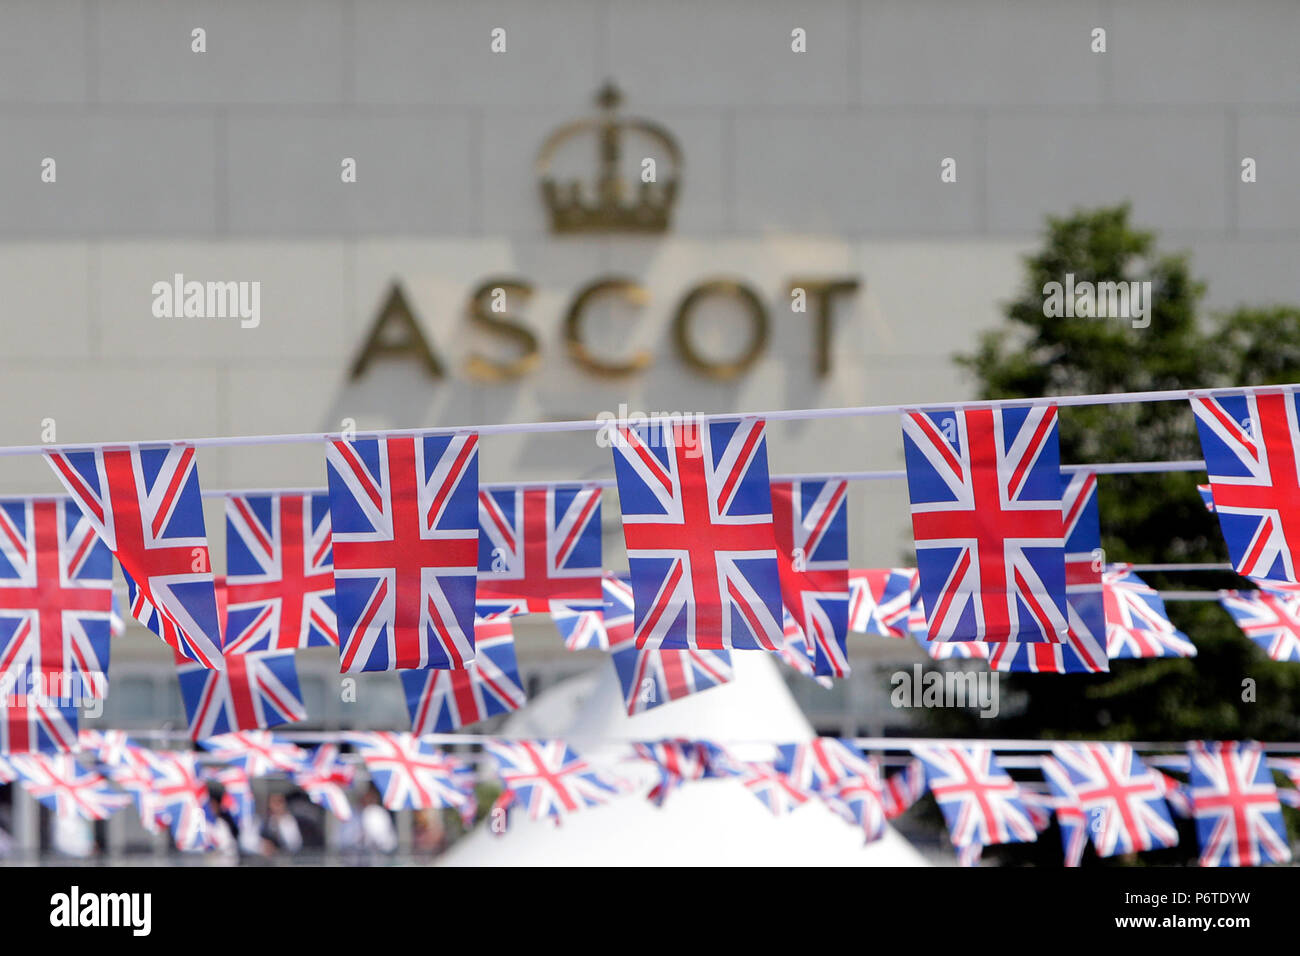 Royal Ascot, National flags Stock Photo